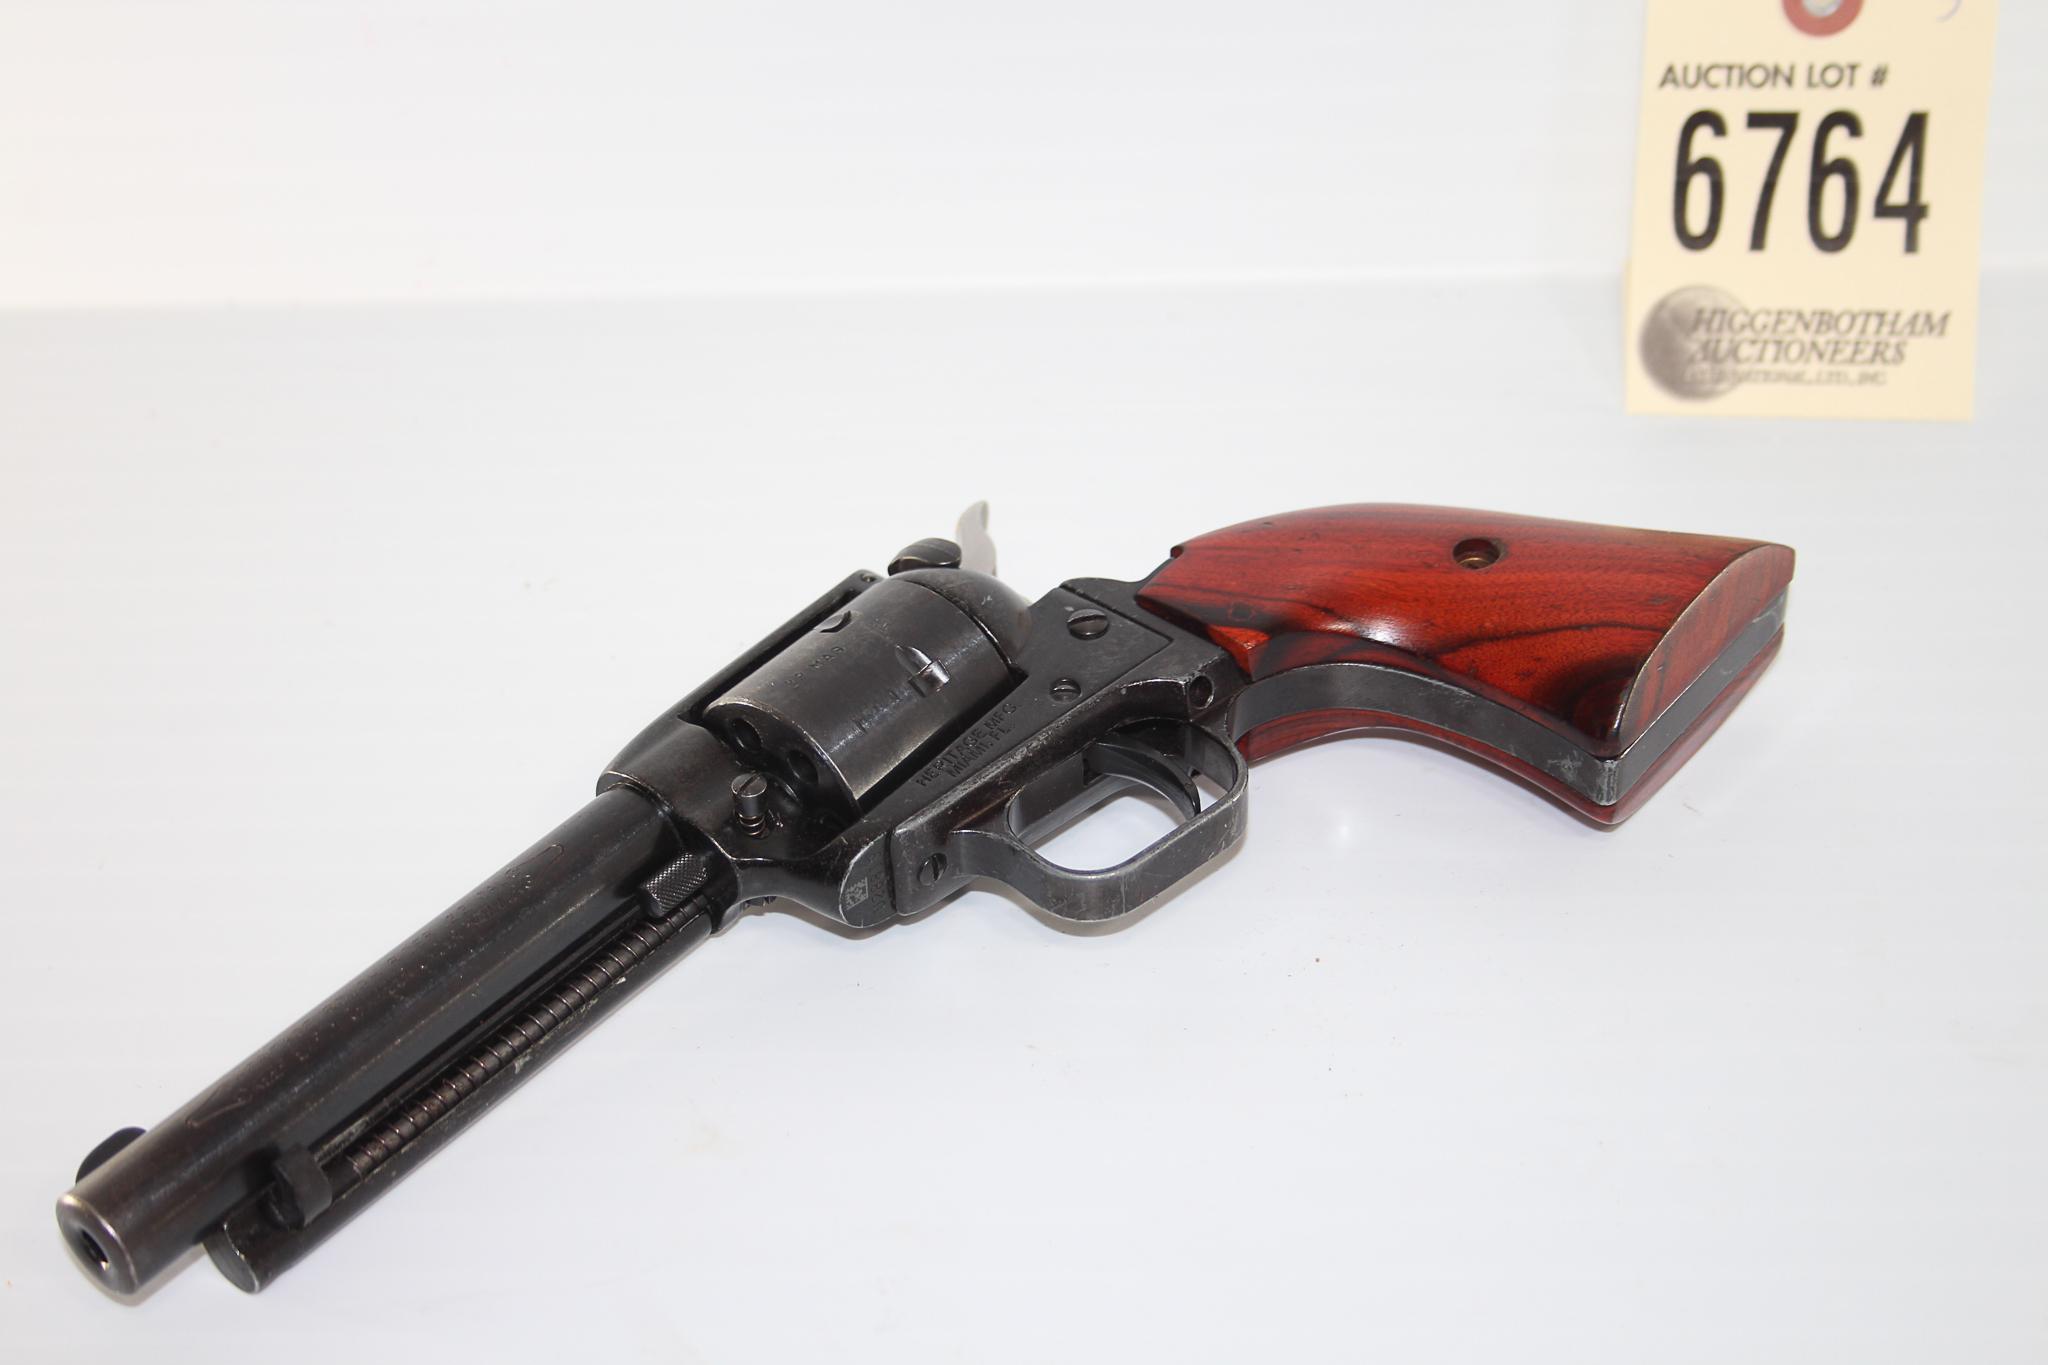 Heritage 22Mag Revolver